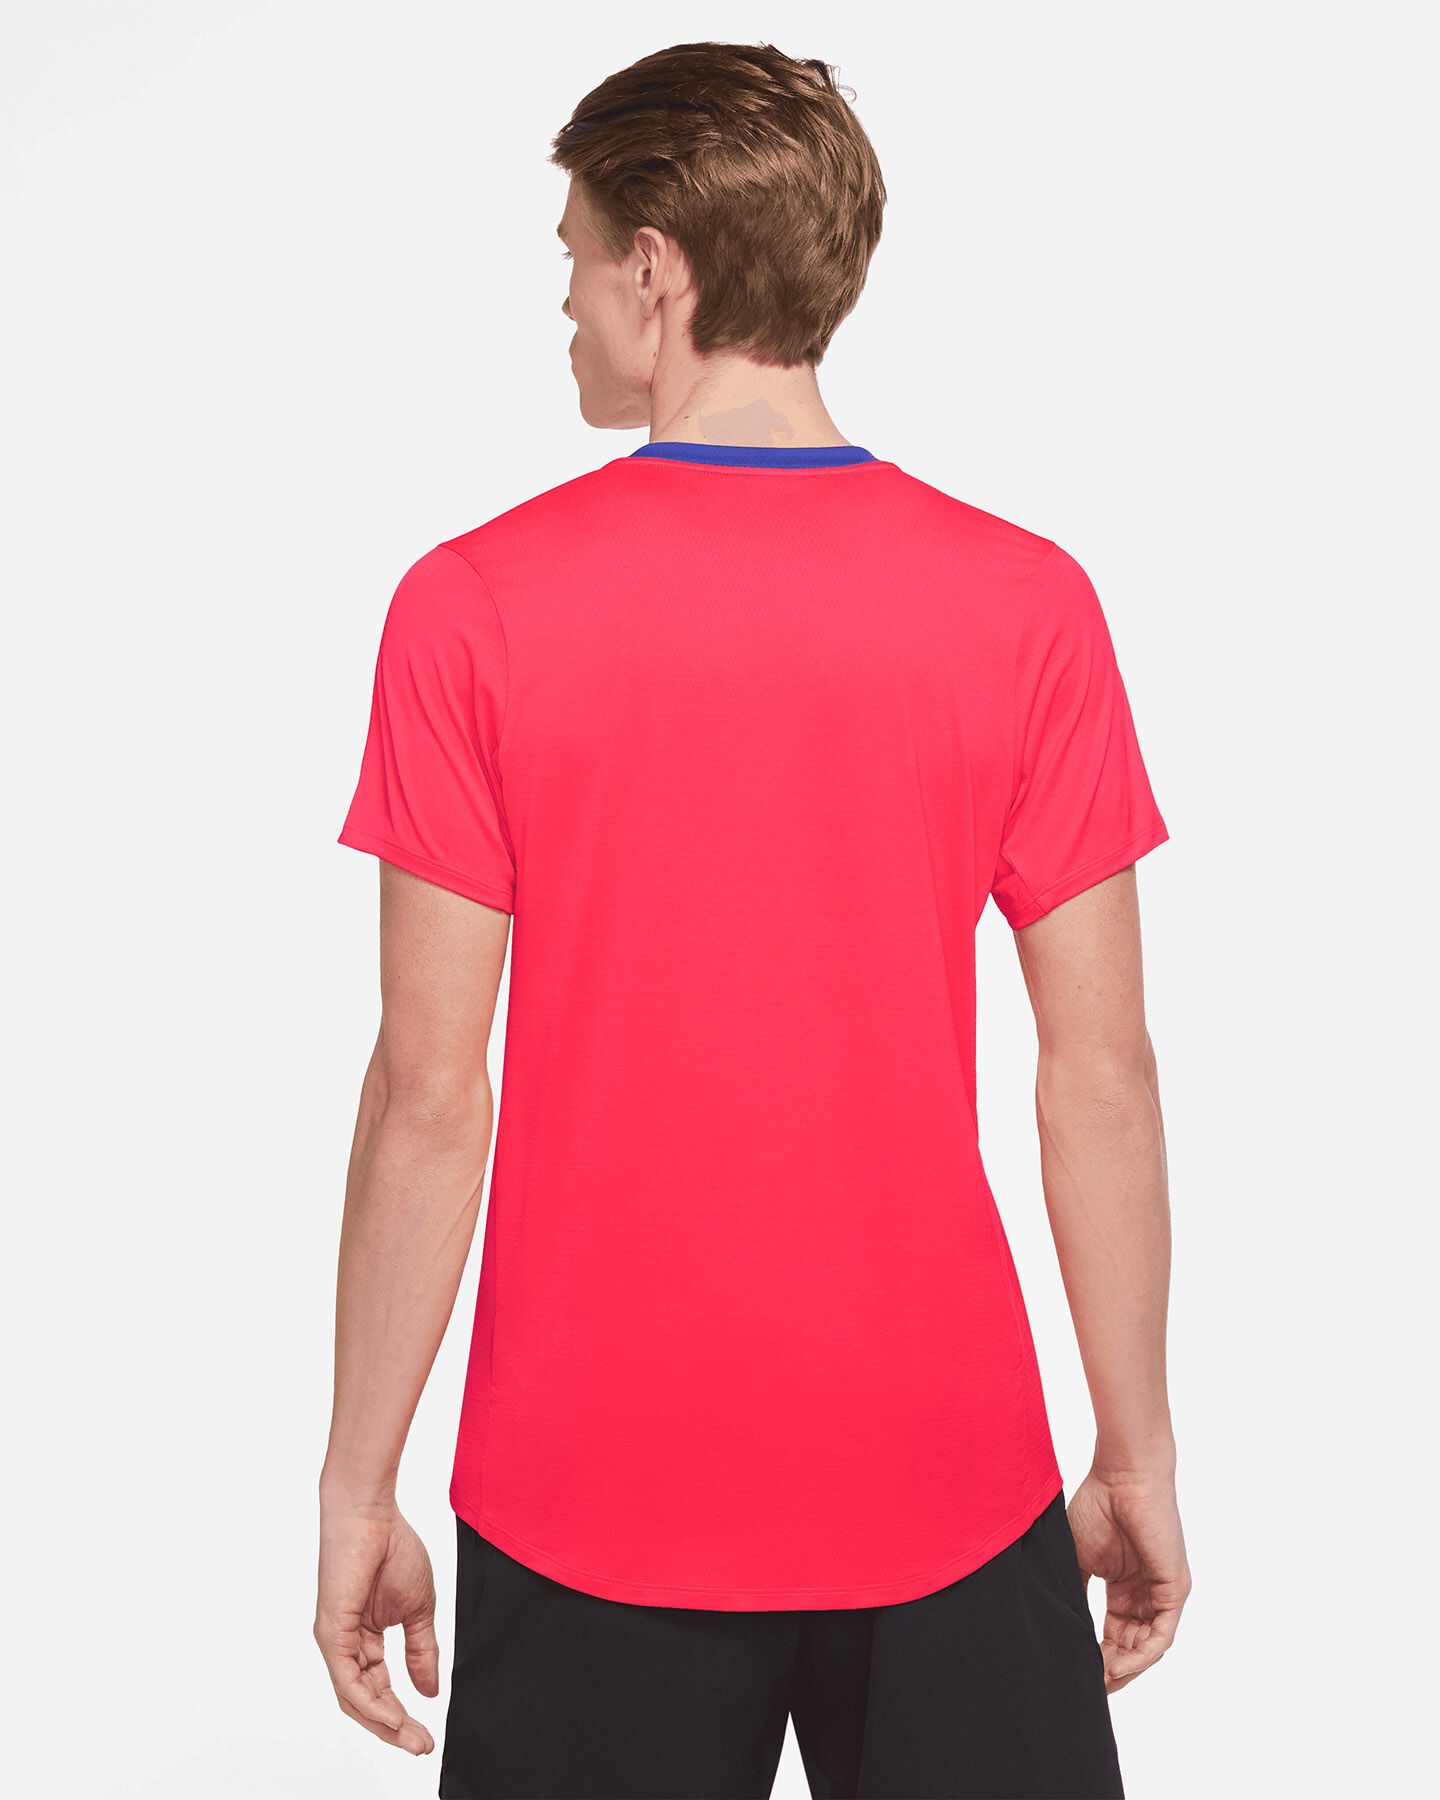  T-Shirt tennis NIKE ADVANTAGE M S5455804|635|S scatto 1